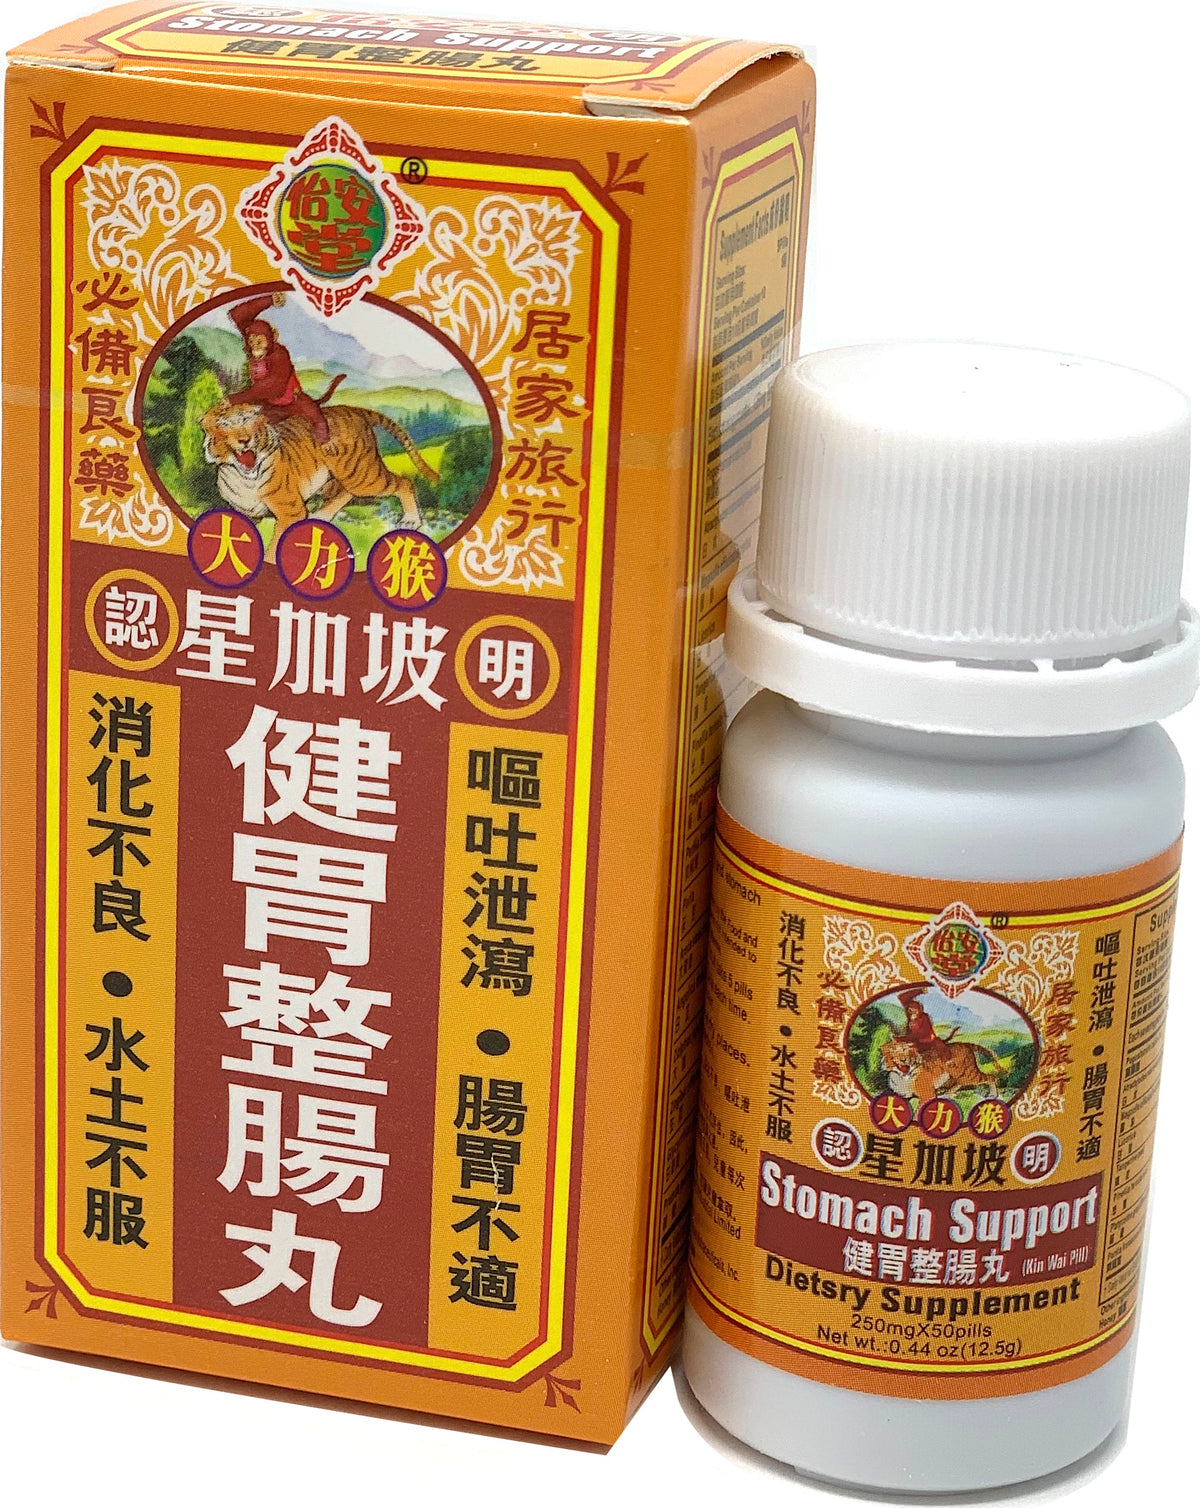 Power Monkey Stomach Support (Kin Wai Pill)